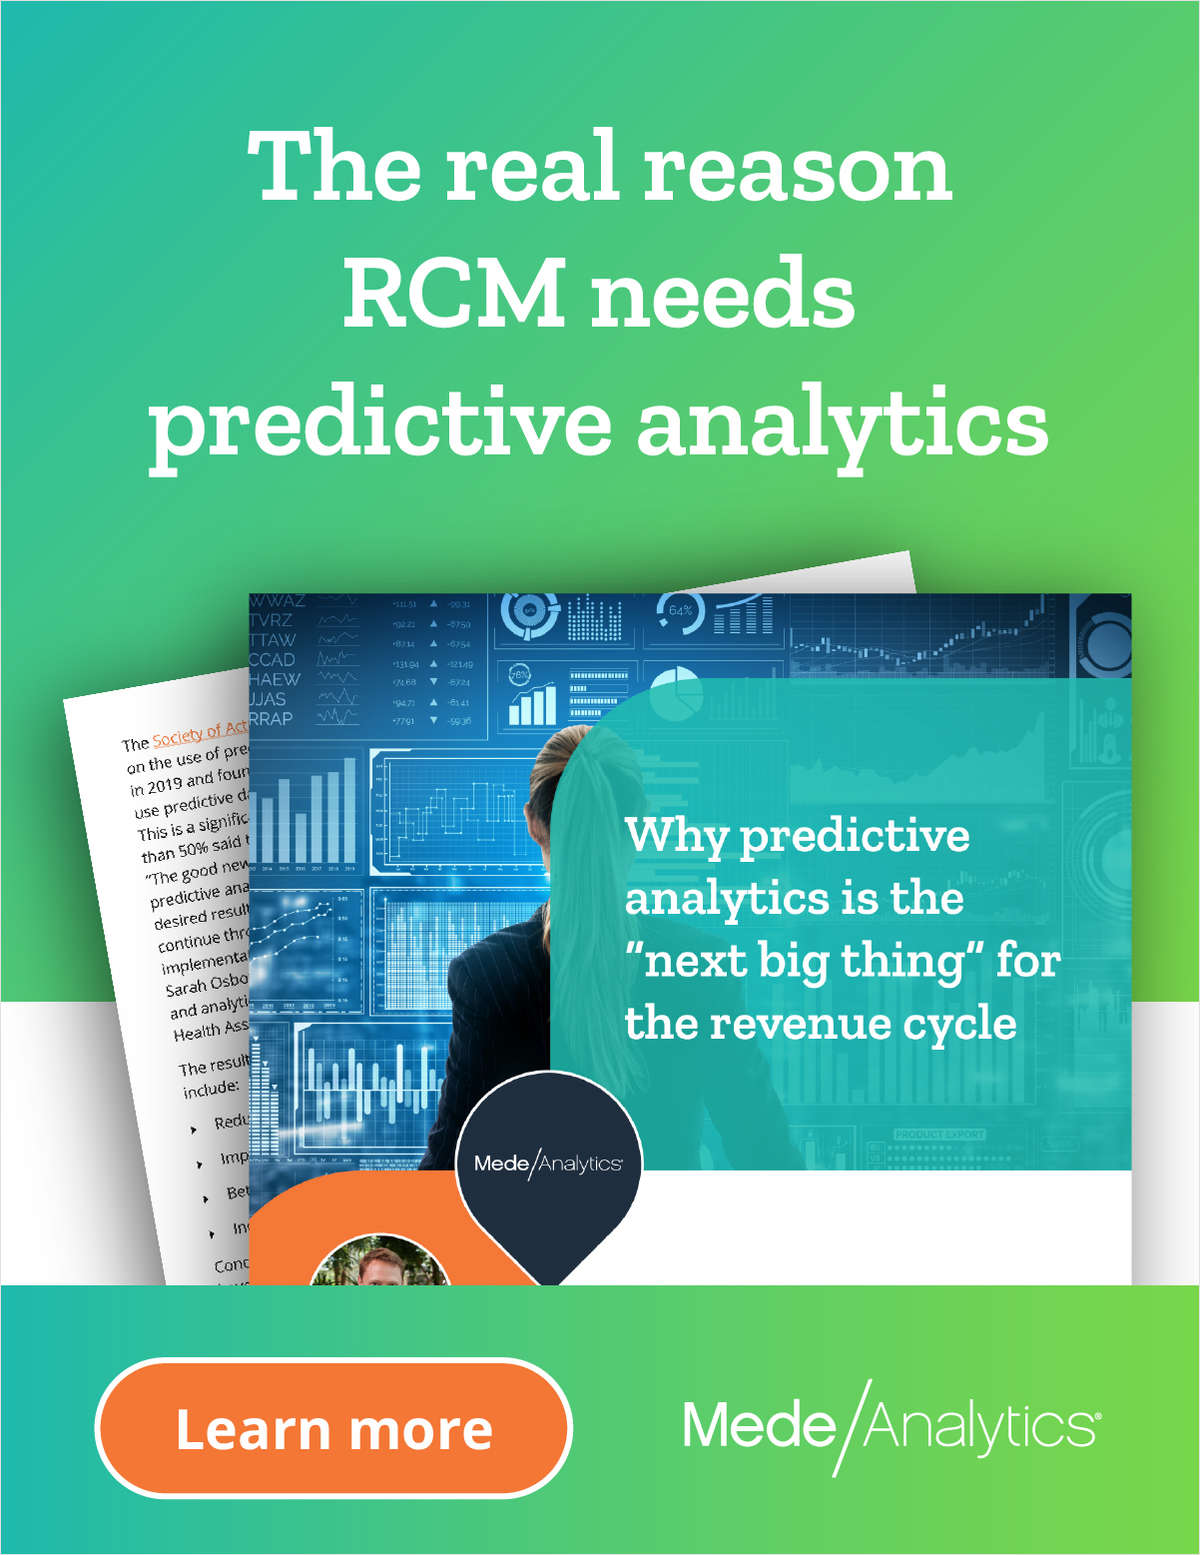 The real reason RCM needs predictive analytics